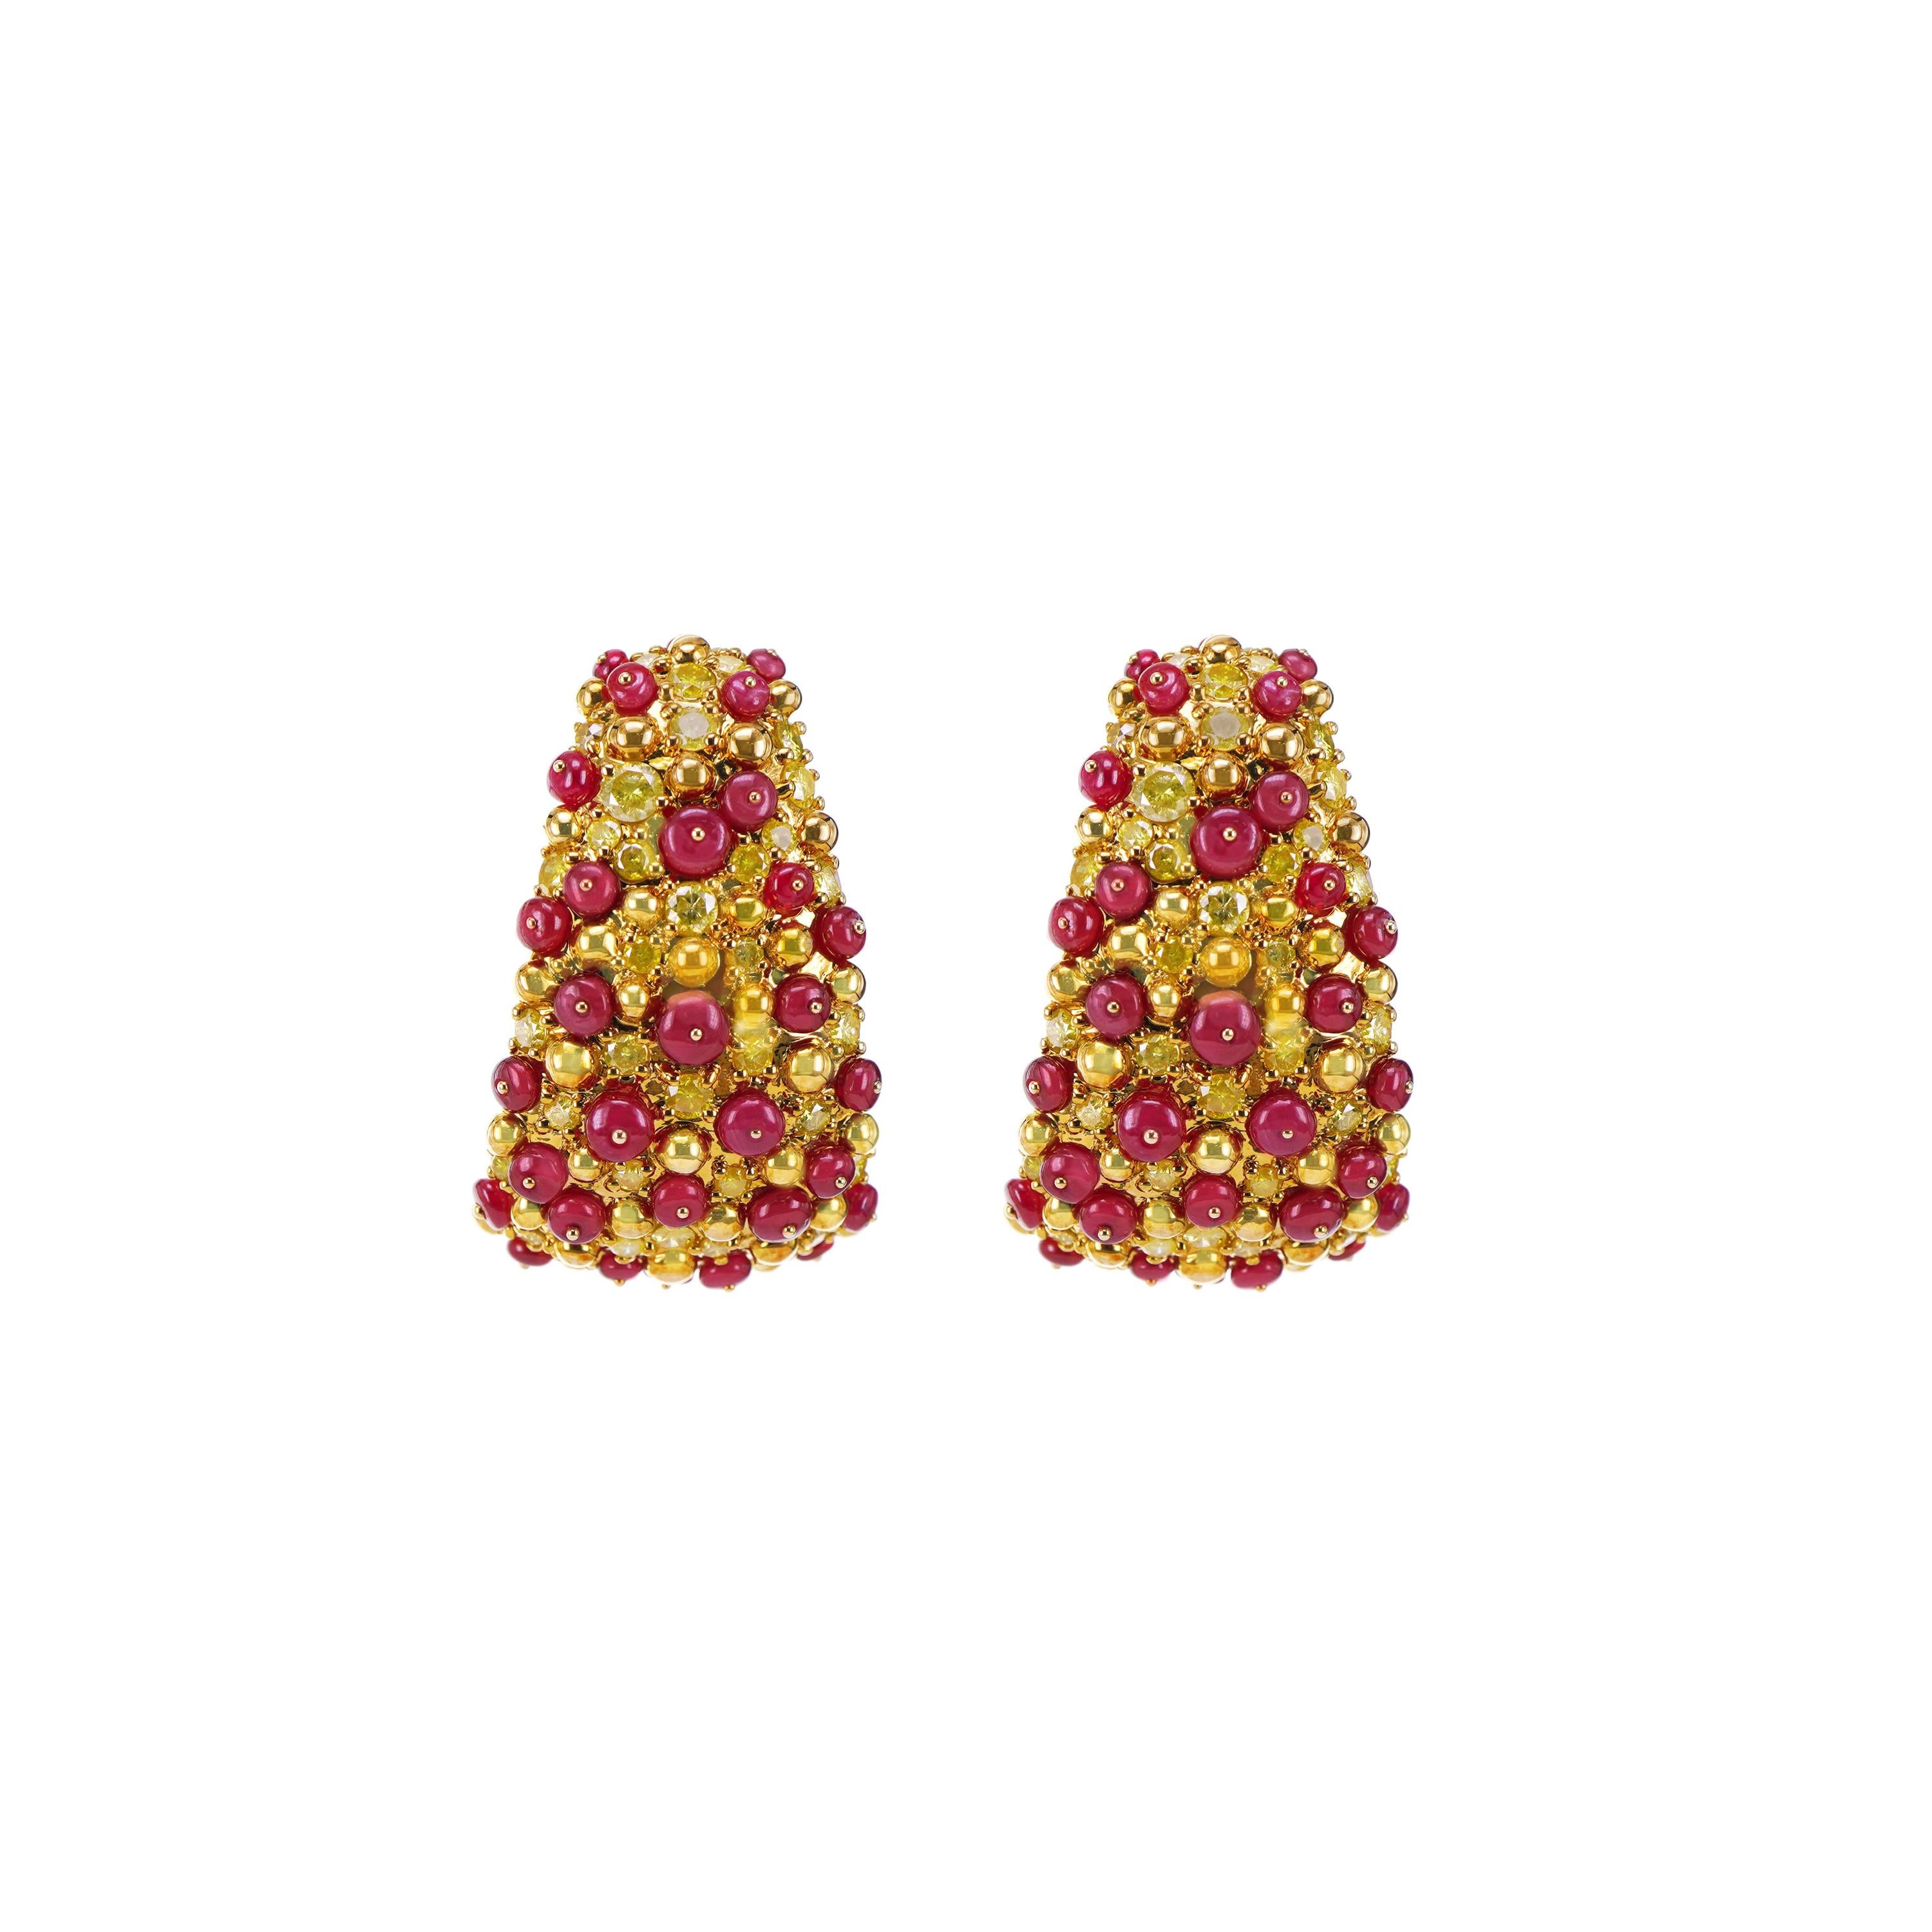 12.98 Carat Vivid Red Ruby 3.78 Carat Vivid Yellow Diamond Dangle Earring